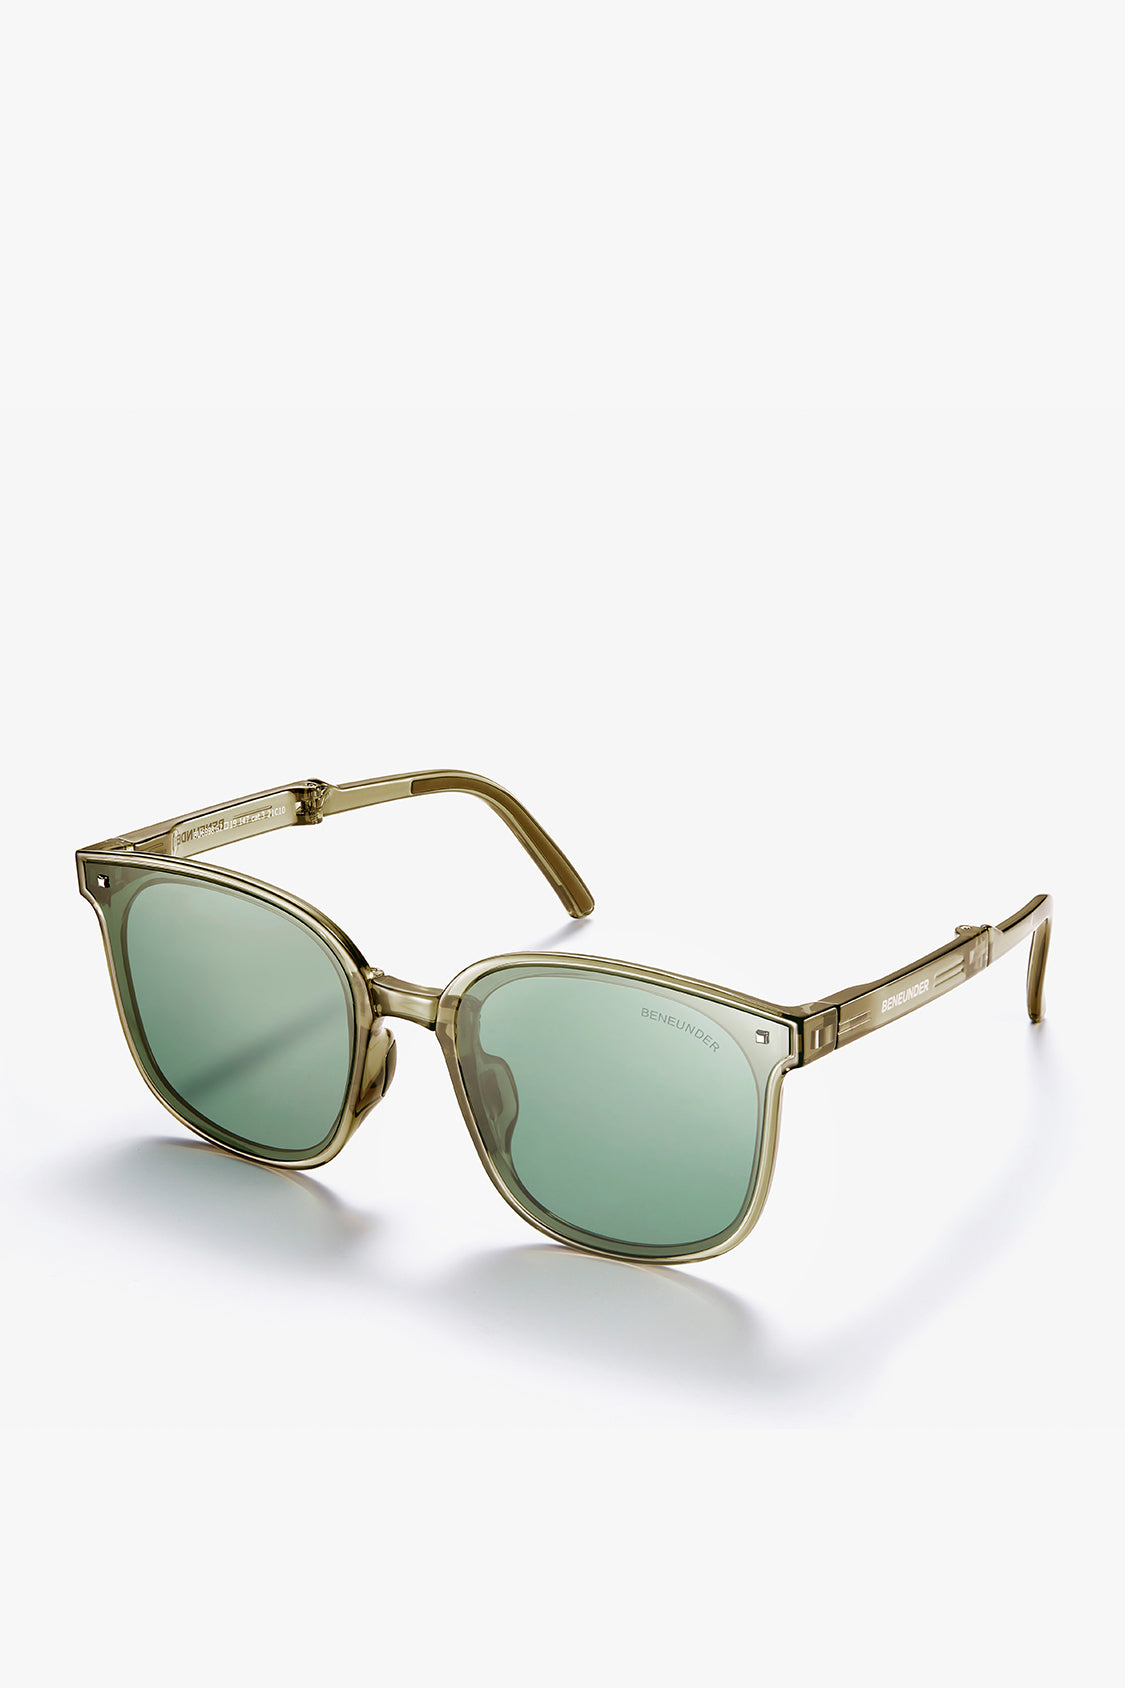 beneunder wild polarized folding sunglasses shades for women men #color_deep space green